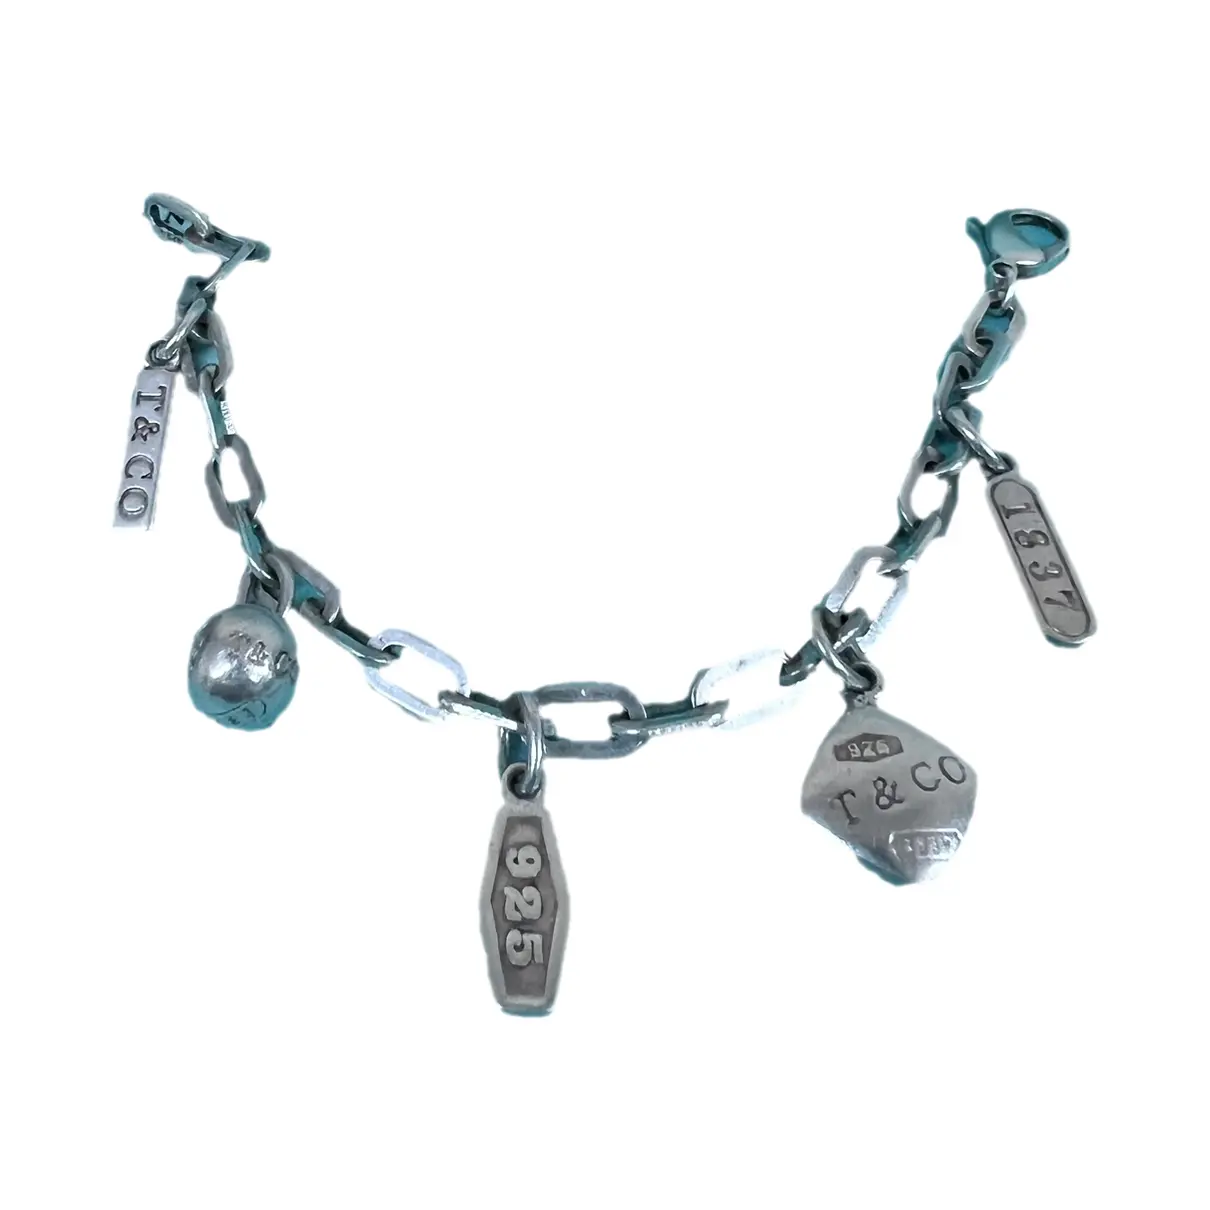 Tiffany 1837 silver bracelet